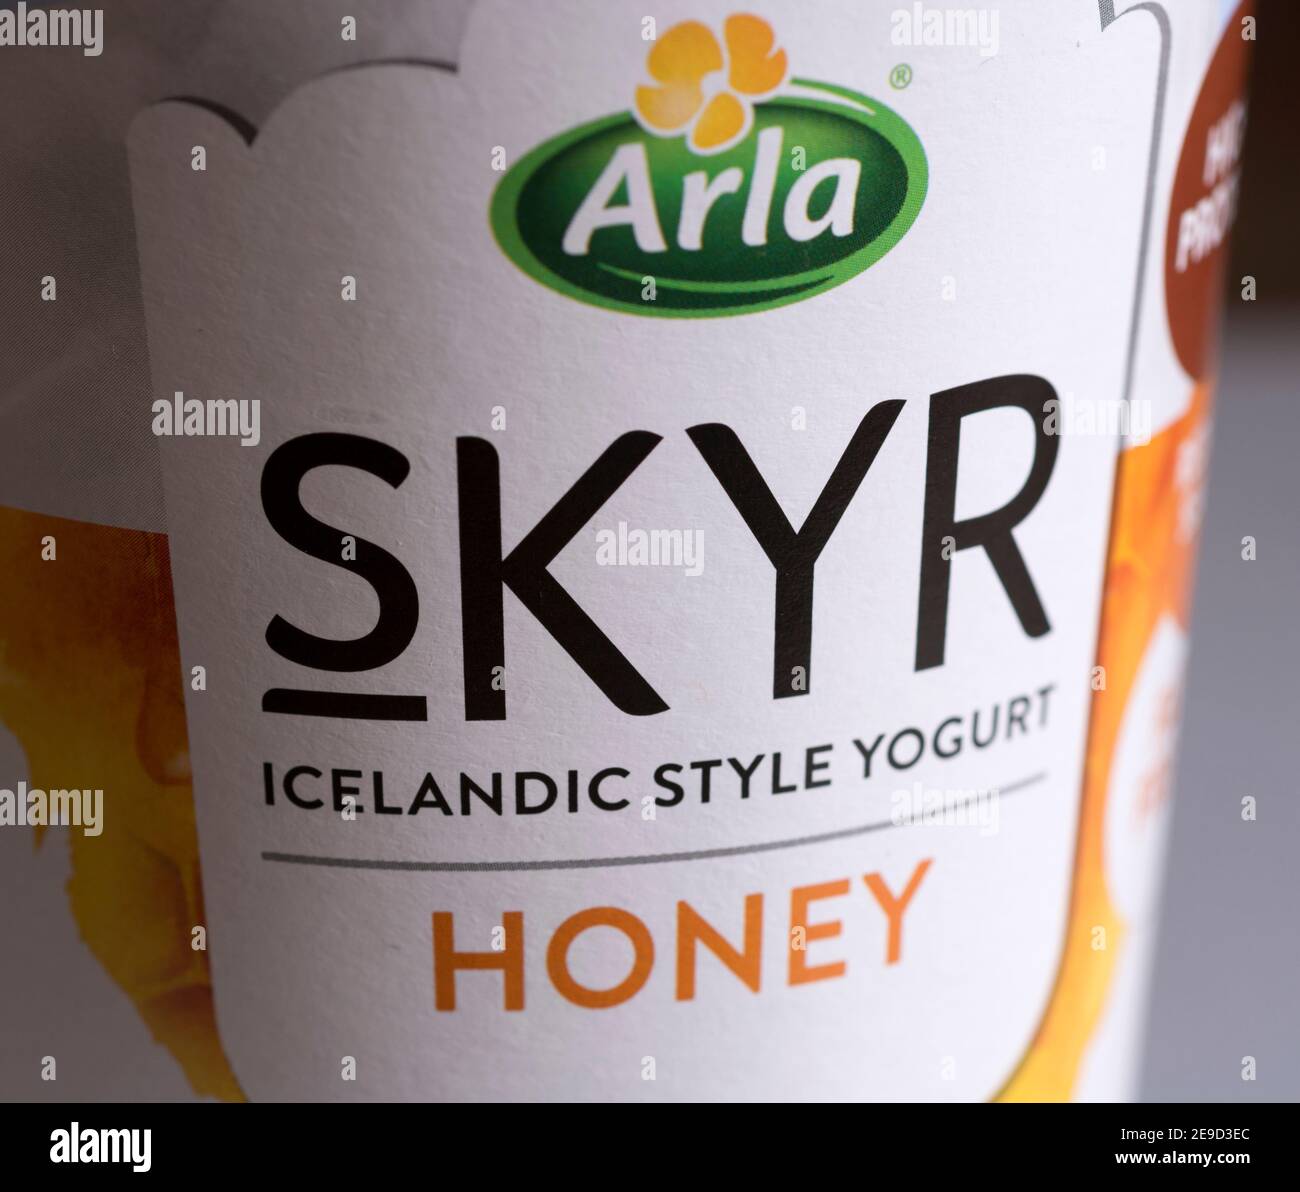 Stock A of - pot Alamy yoghurt Photo Arla Skyr Icelandic style